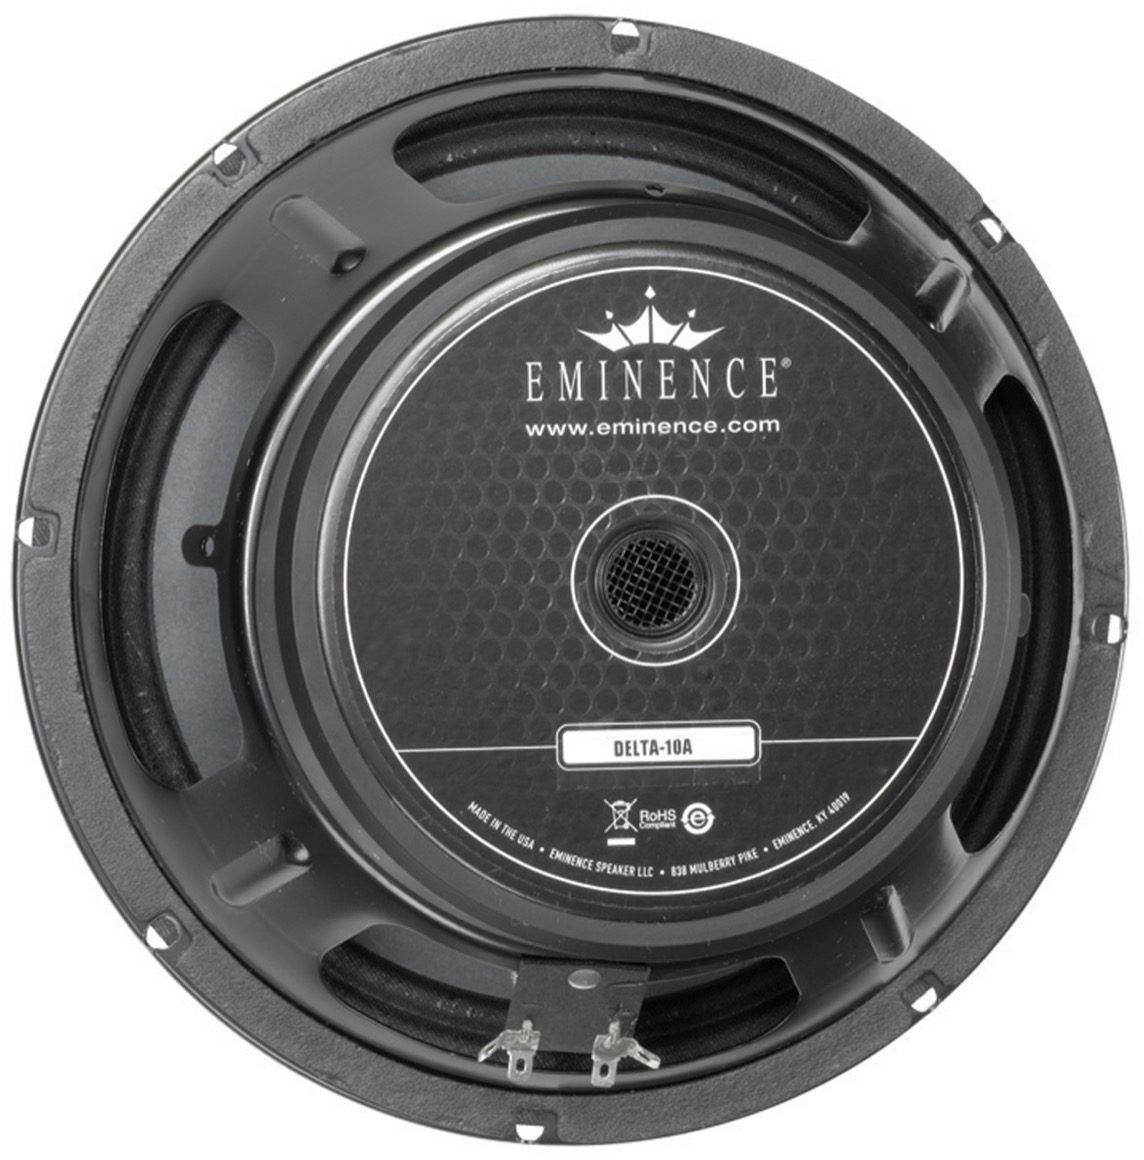 Eminence American Standard Delta-10A 10 Pro Audio Speaker 350 Watts at 8 Ohms 